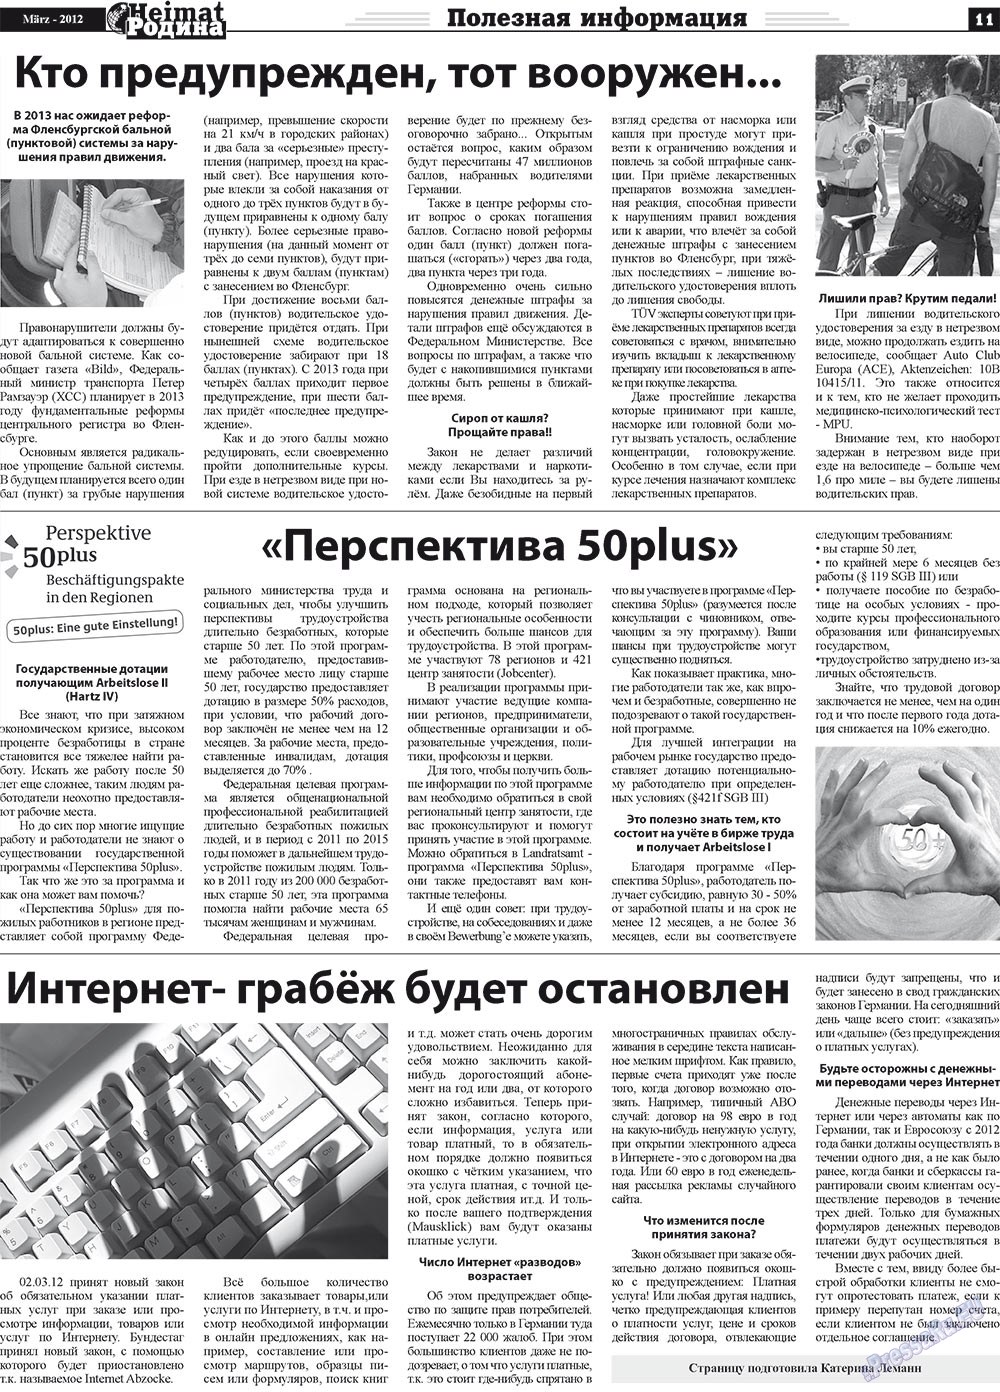 Heimat-Родина, газета. 2012 №3 стр.11